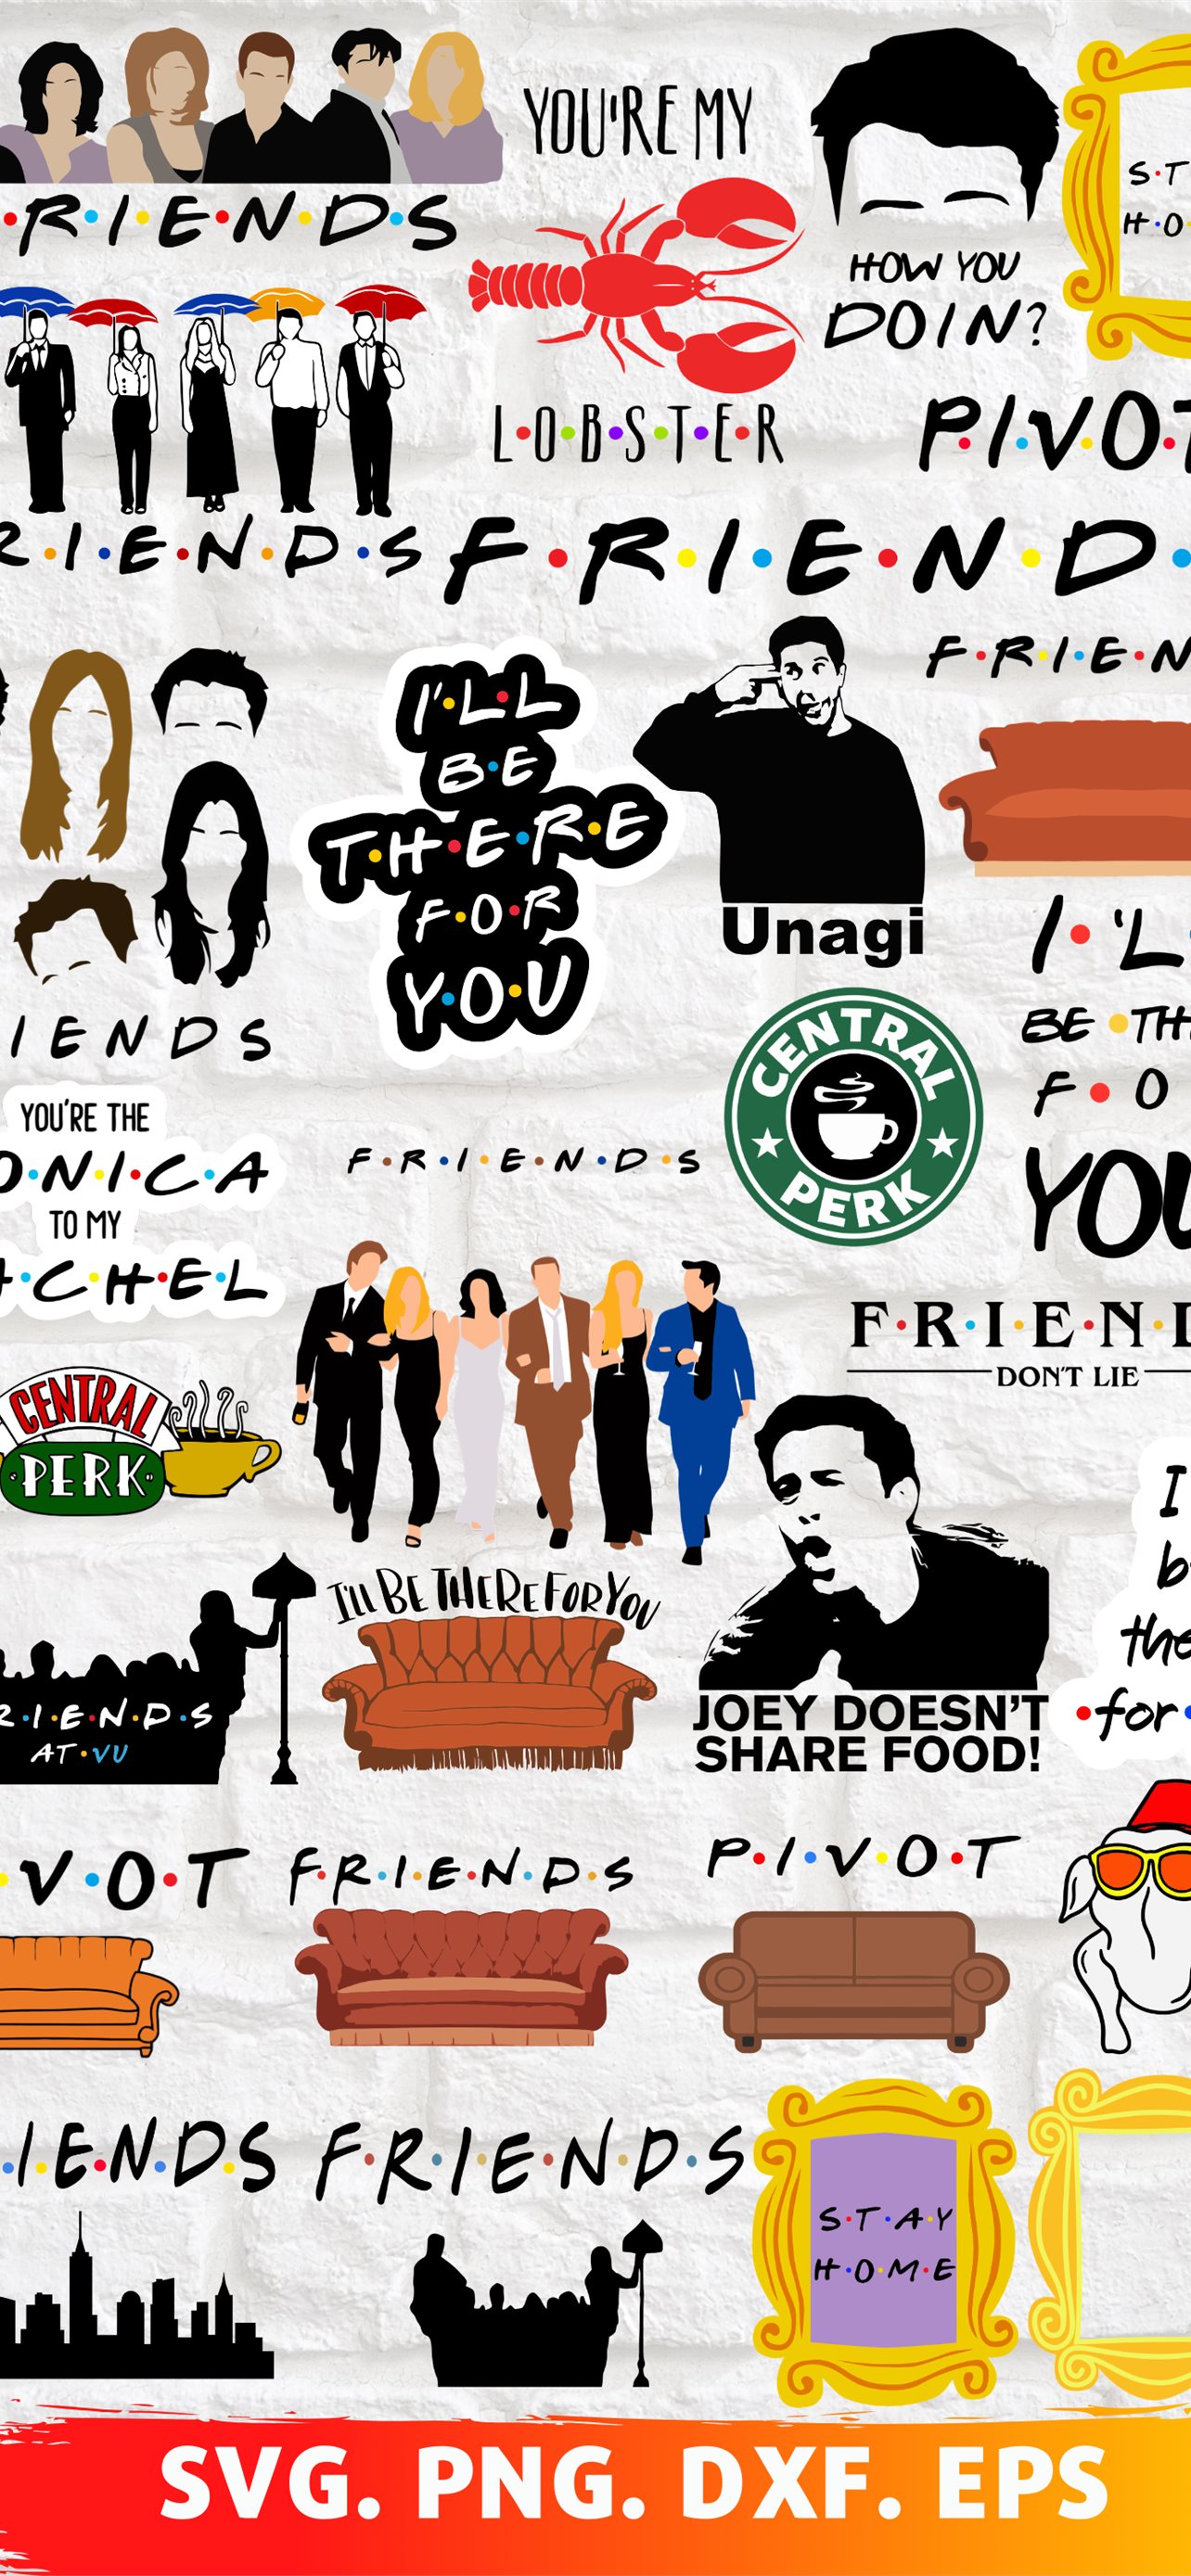 3 Best Friends Wallpaper - EnJpg-mncb.edu.vn